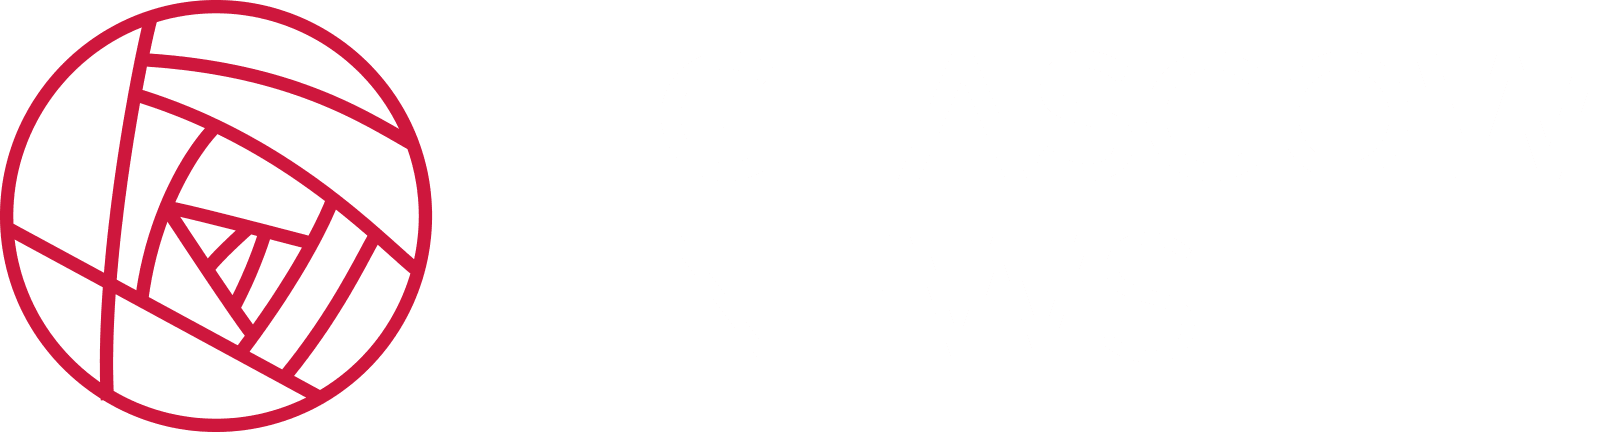 Glasgow and Scottish News